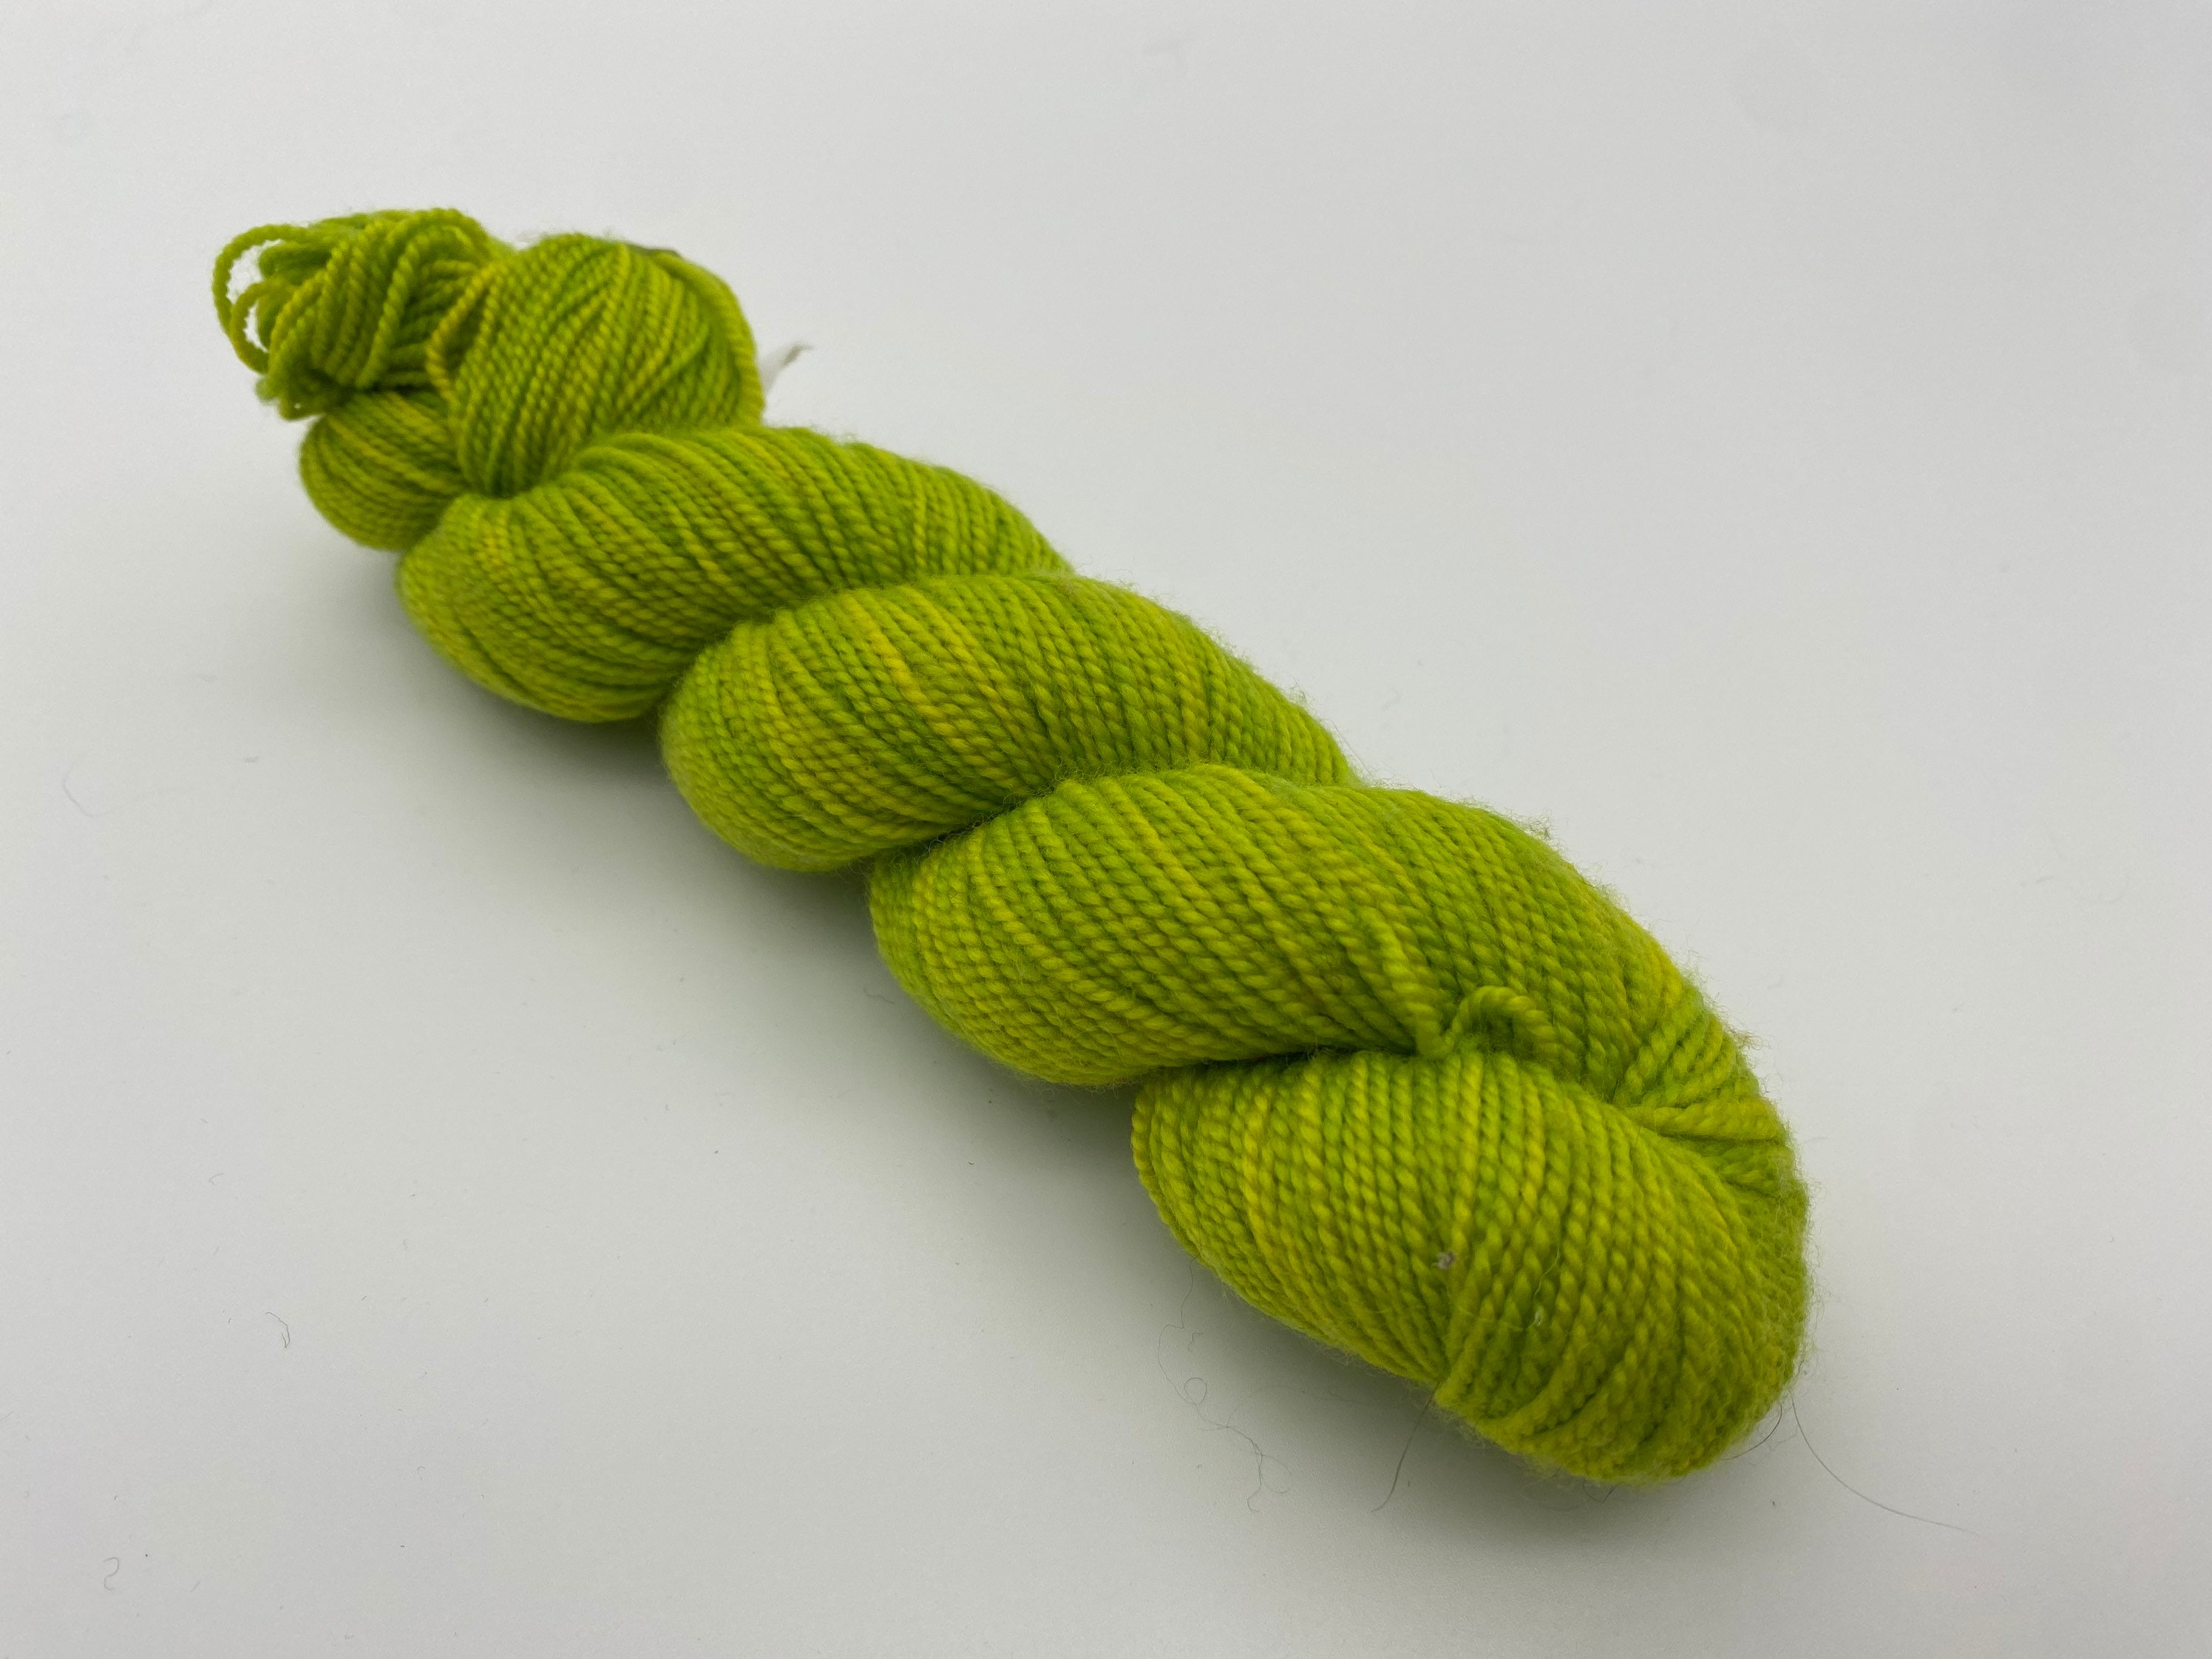 Electric green yarn, neon green yarn, neon yarn with speckles, green hand  dyed yarn. - Destination Yarn